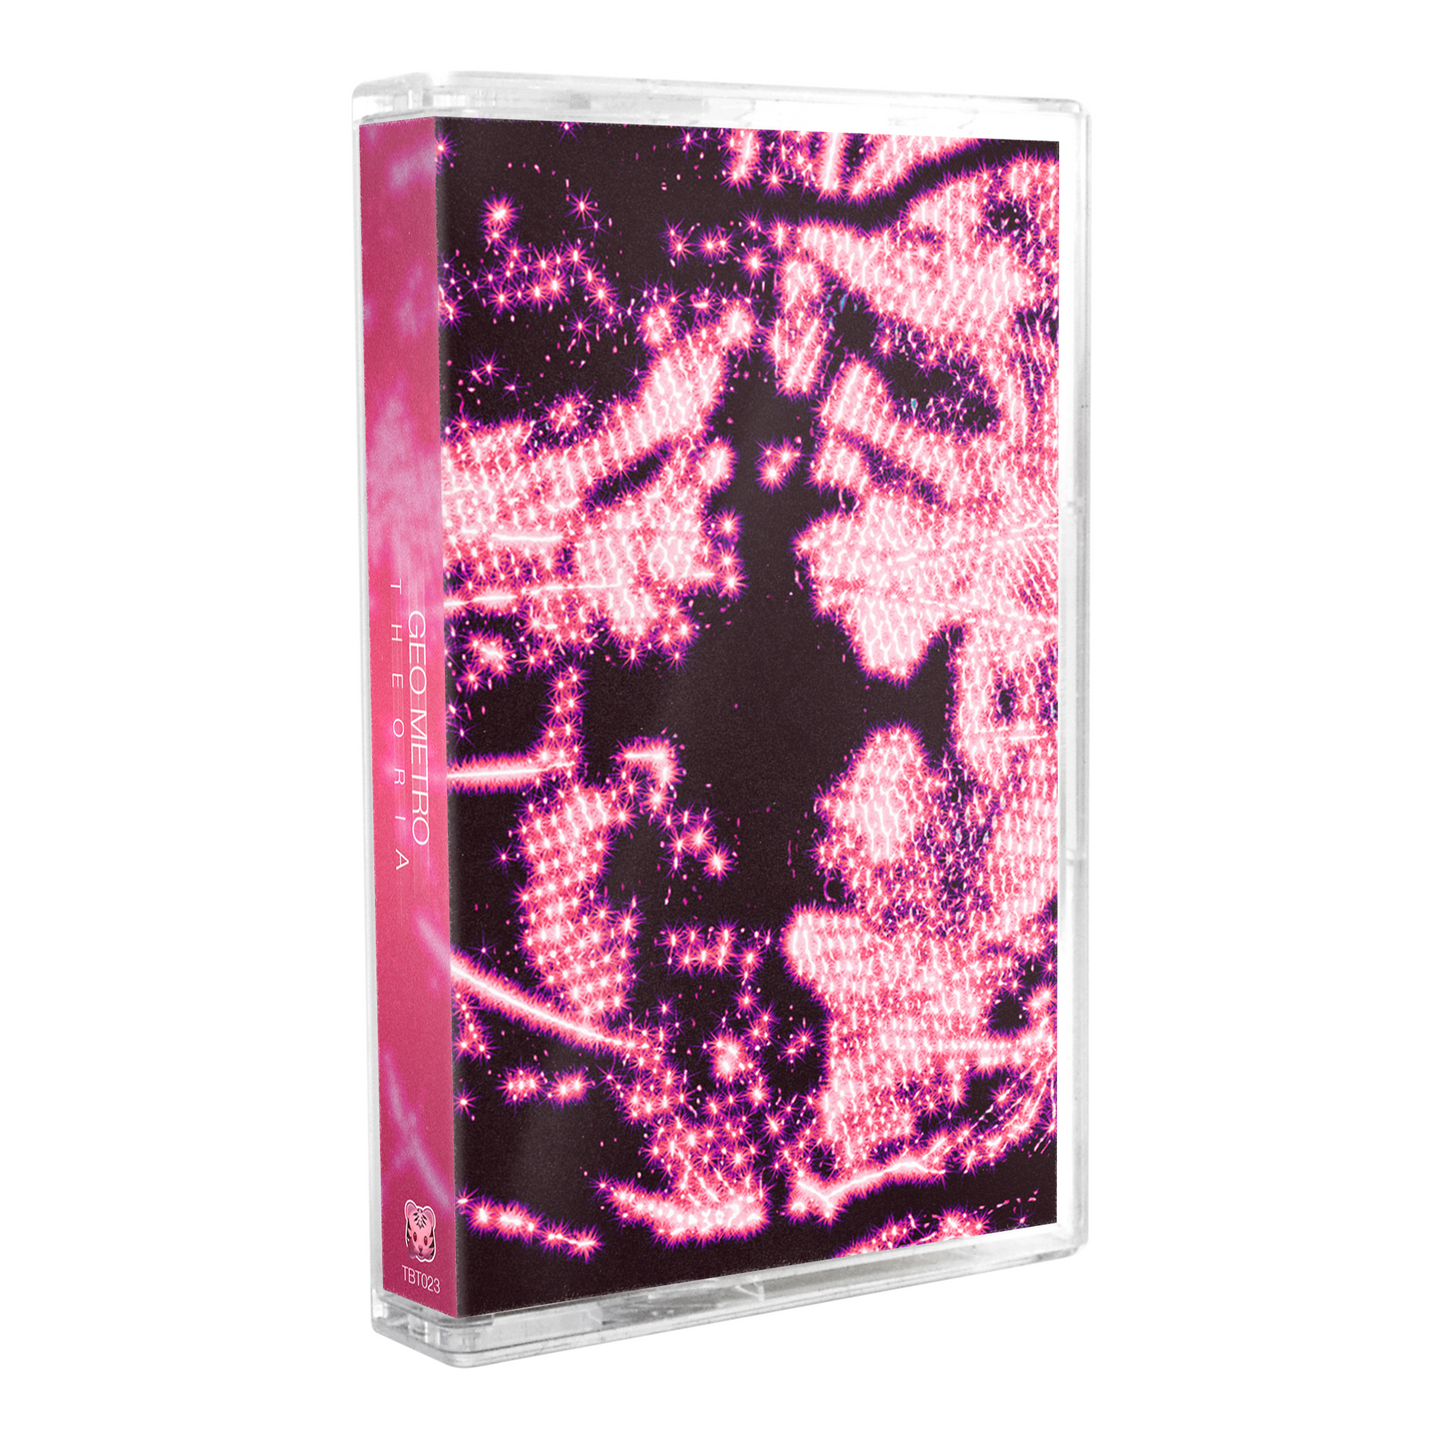 Geo Metro - "Theoria" Limited Edition Cassette Tape